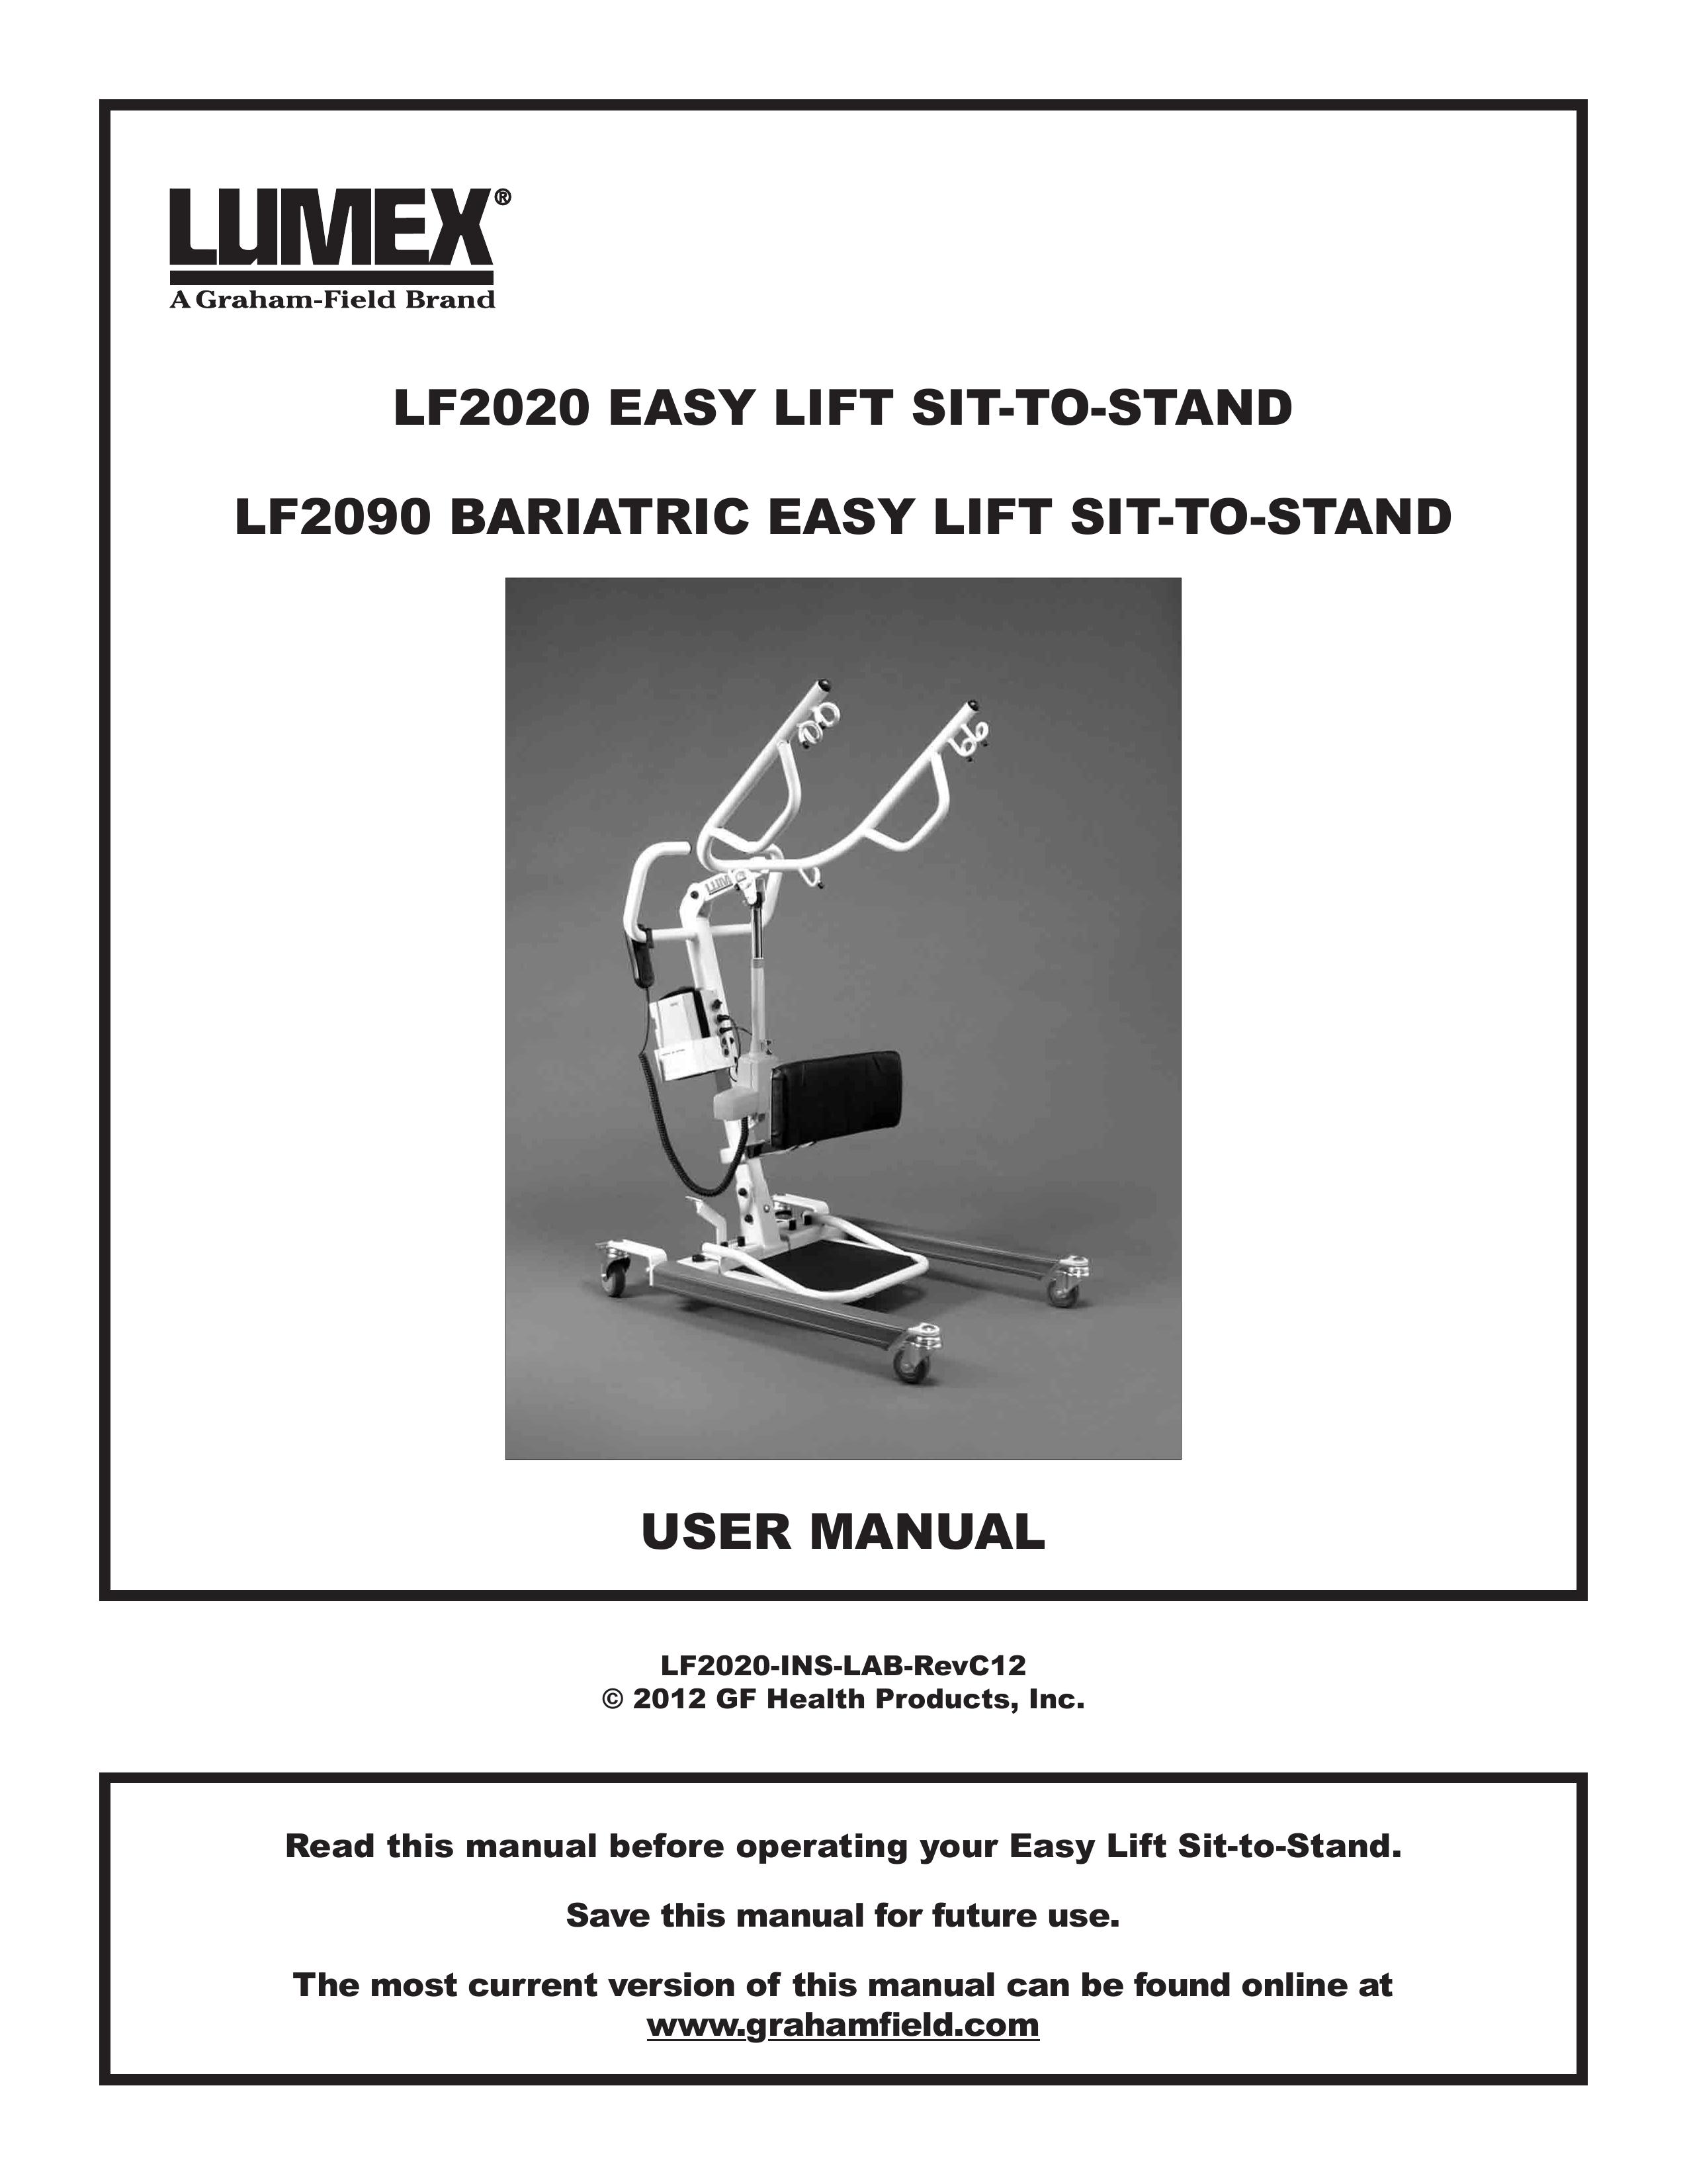 Graham Field LF2020 Personal Lift User Manual